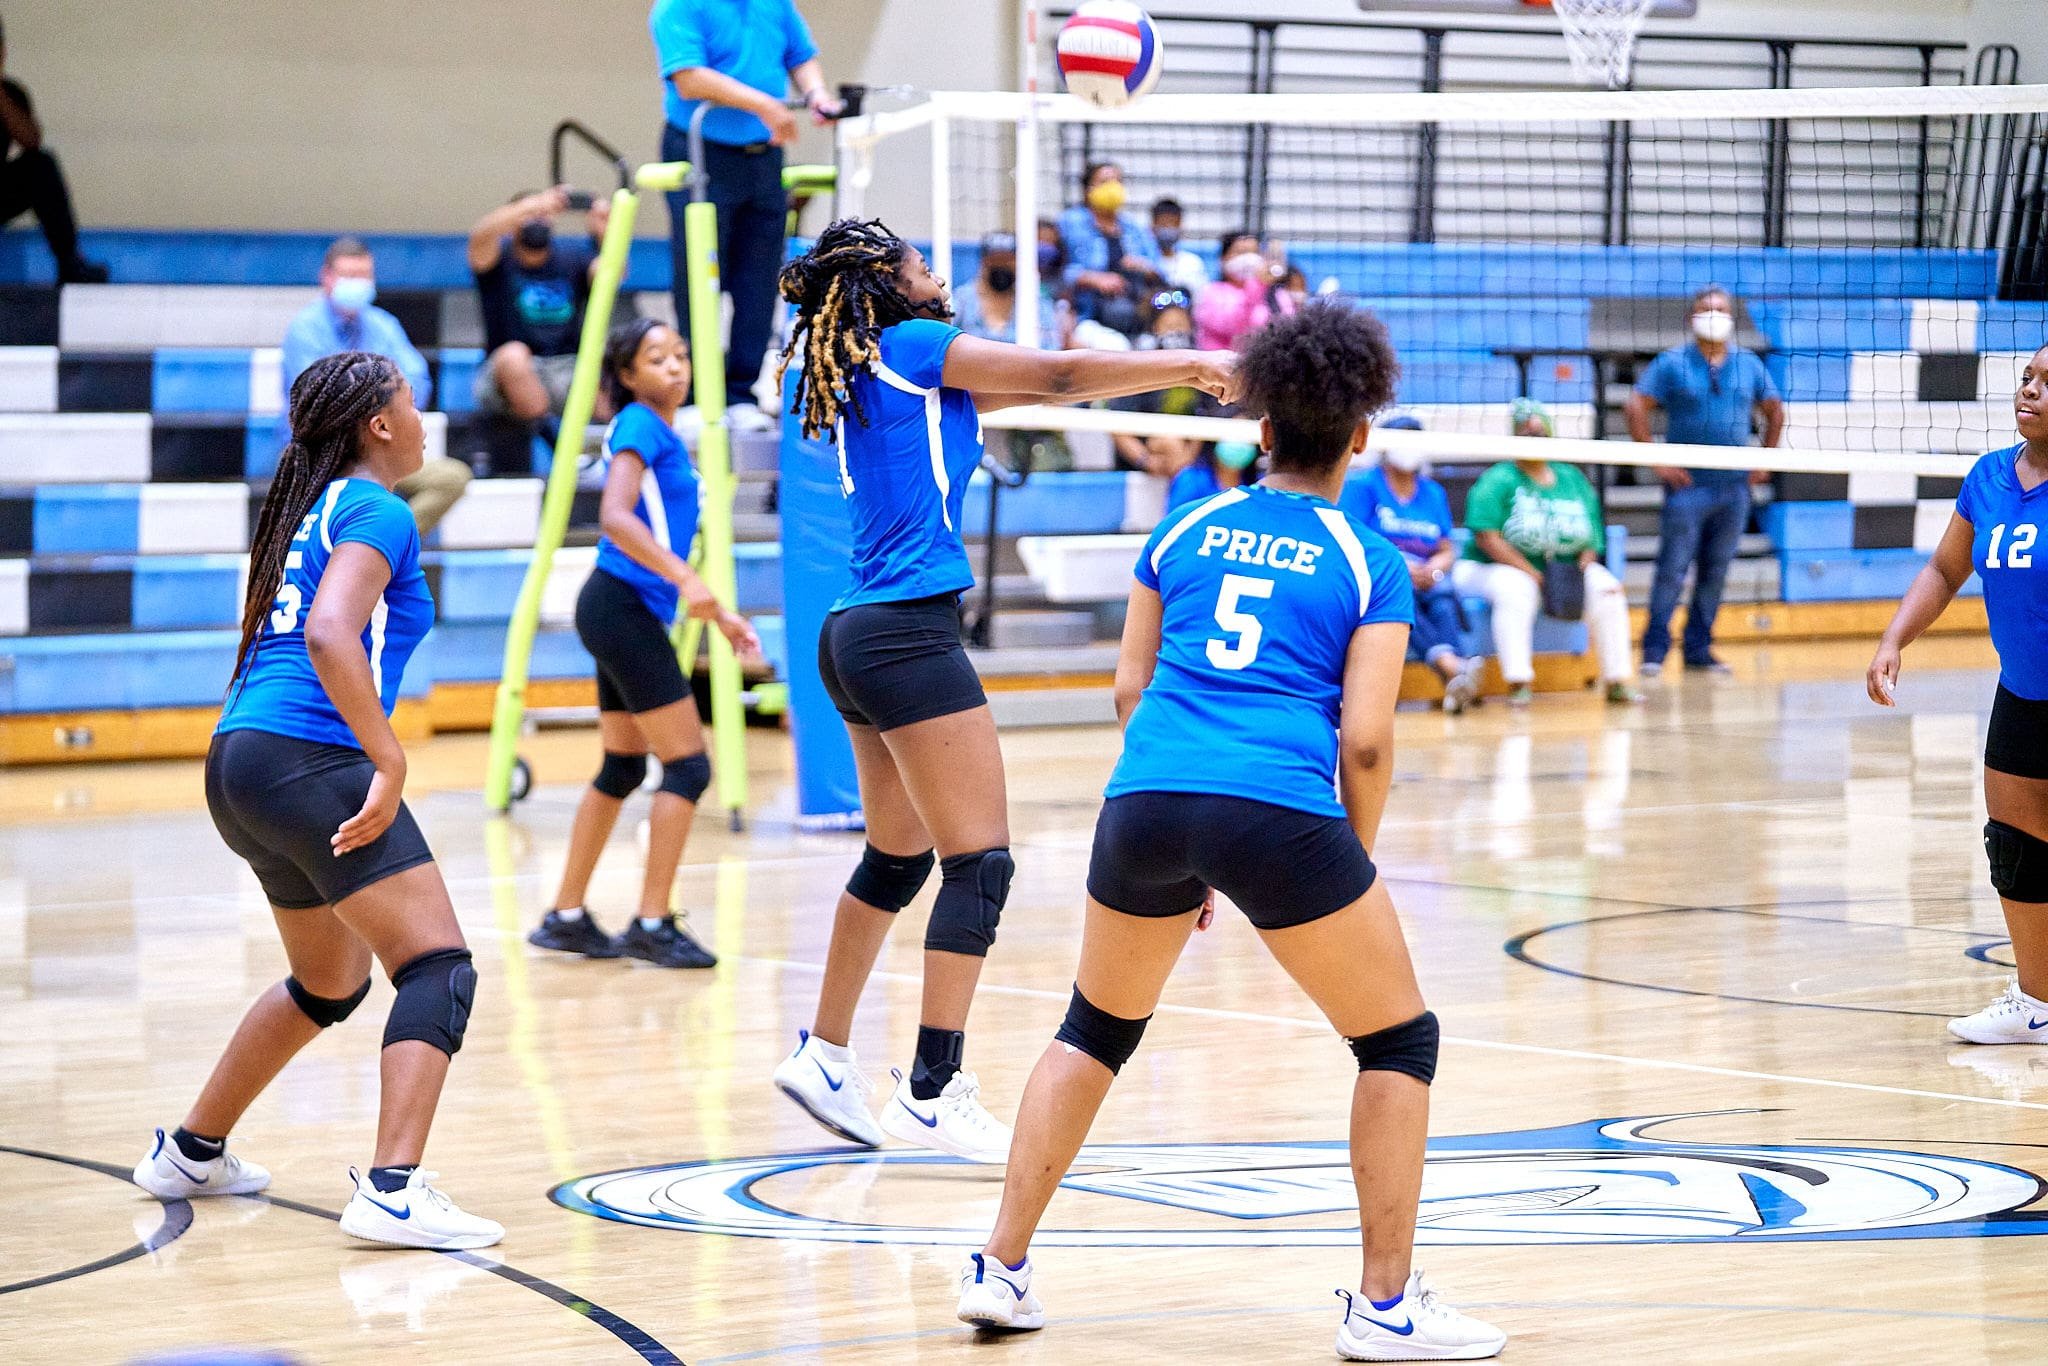 Black Girls Volleyball High School Los Angeles Price 4-min.jpeg